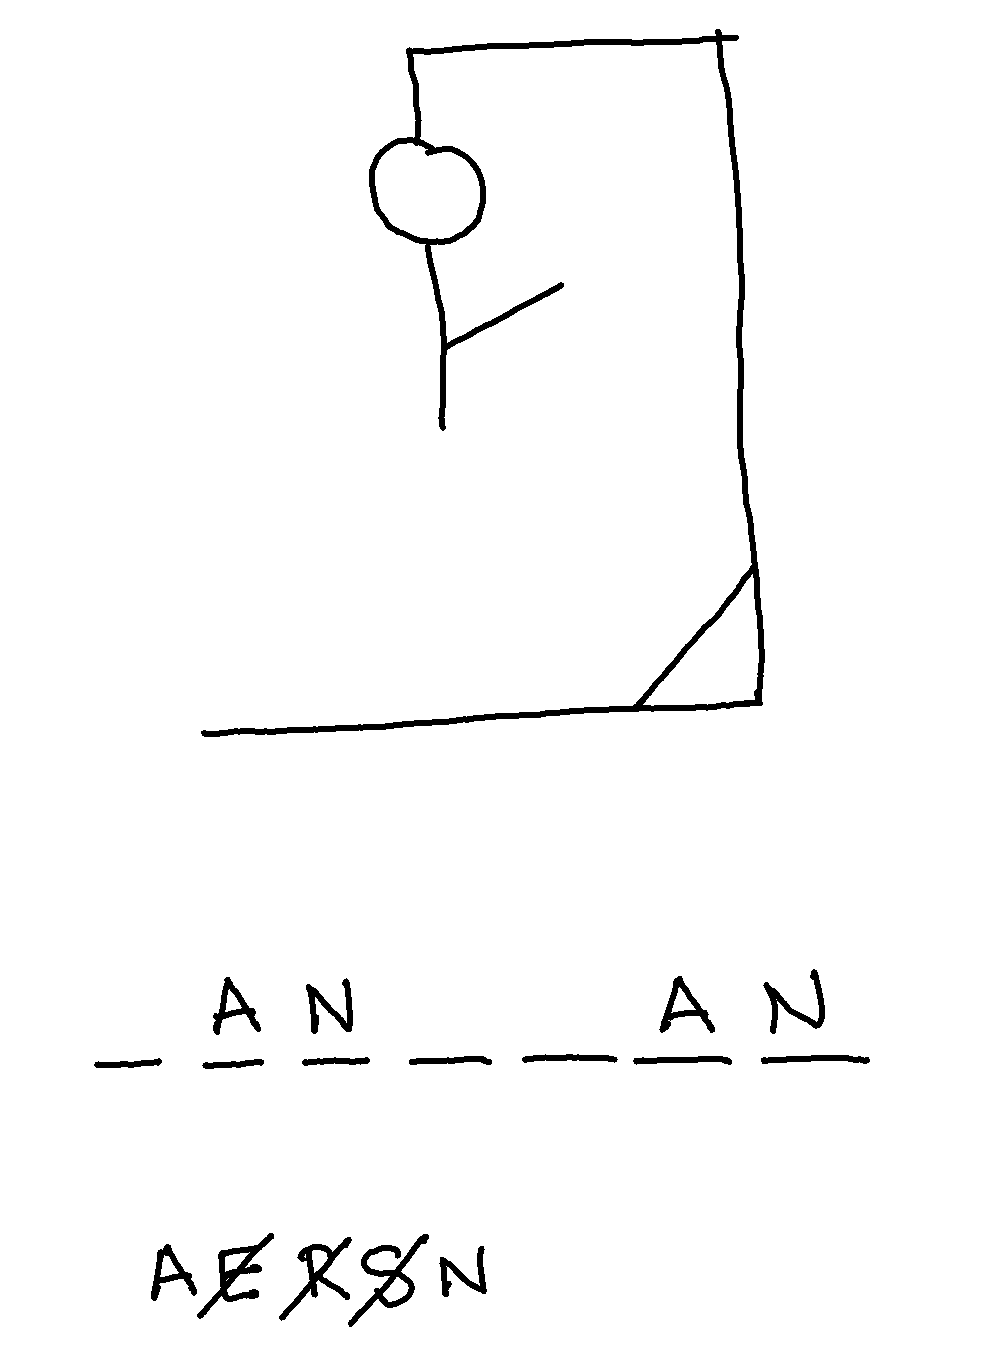 A game of hangman in progress